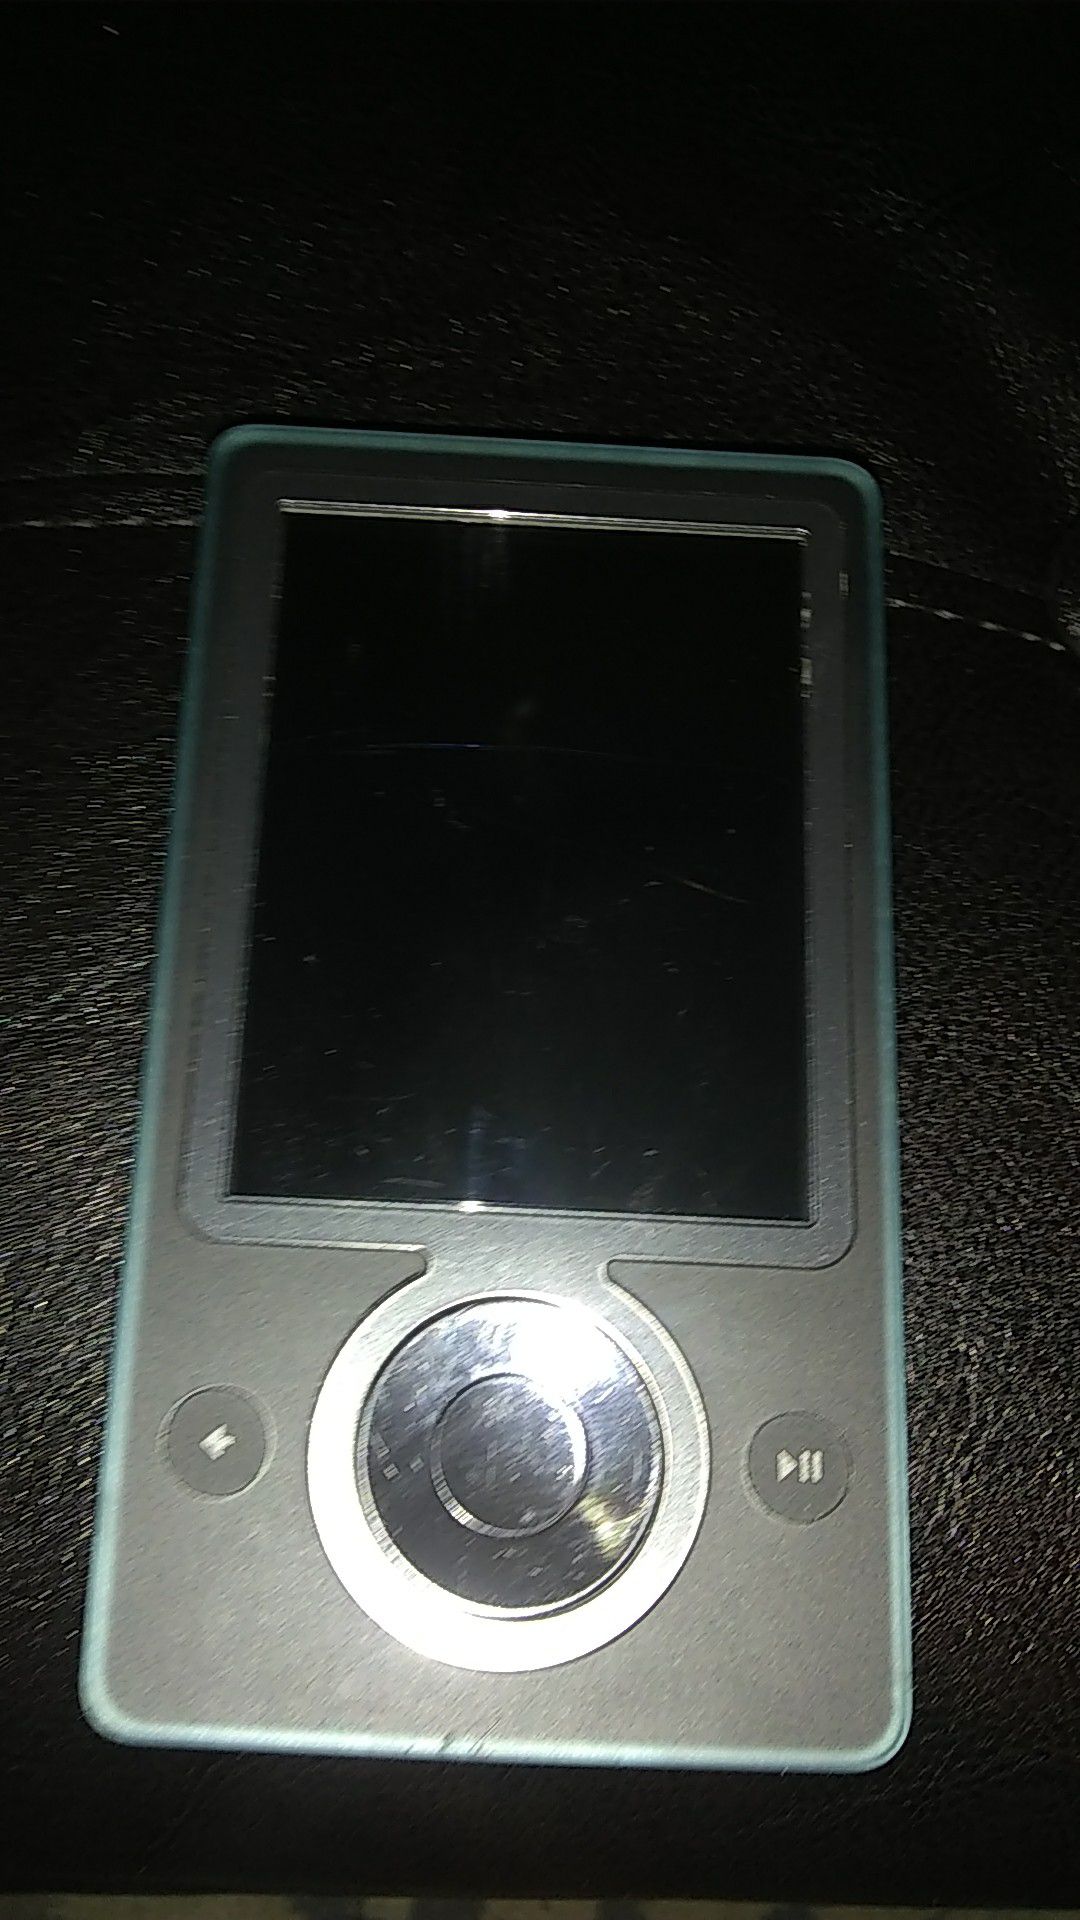 Zune 30 GB Digital Media Player (Black)